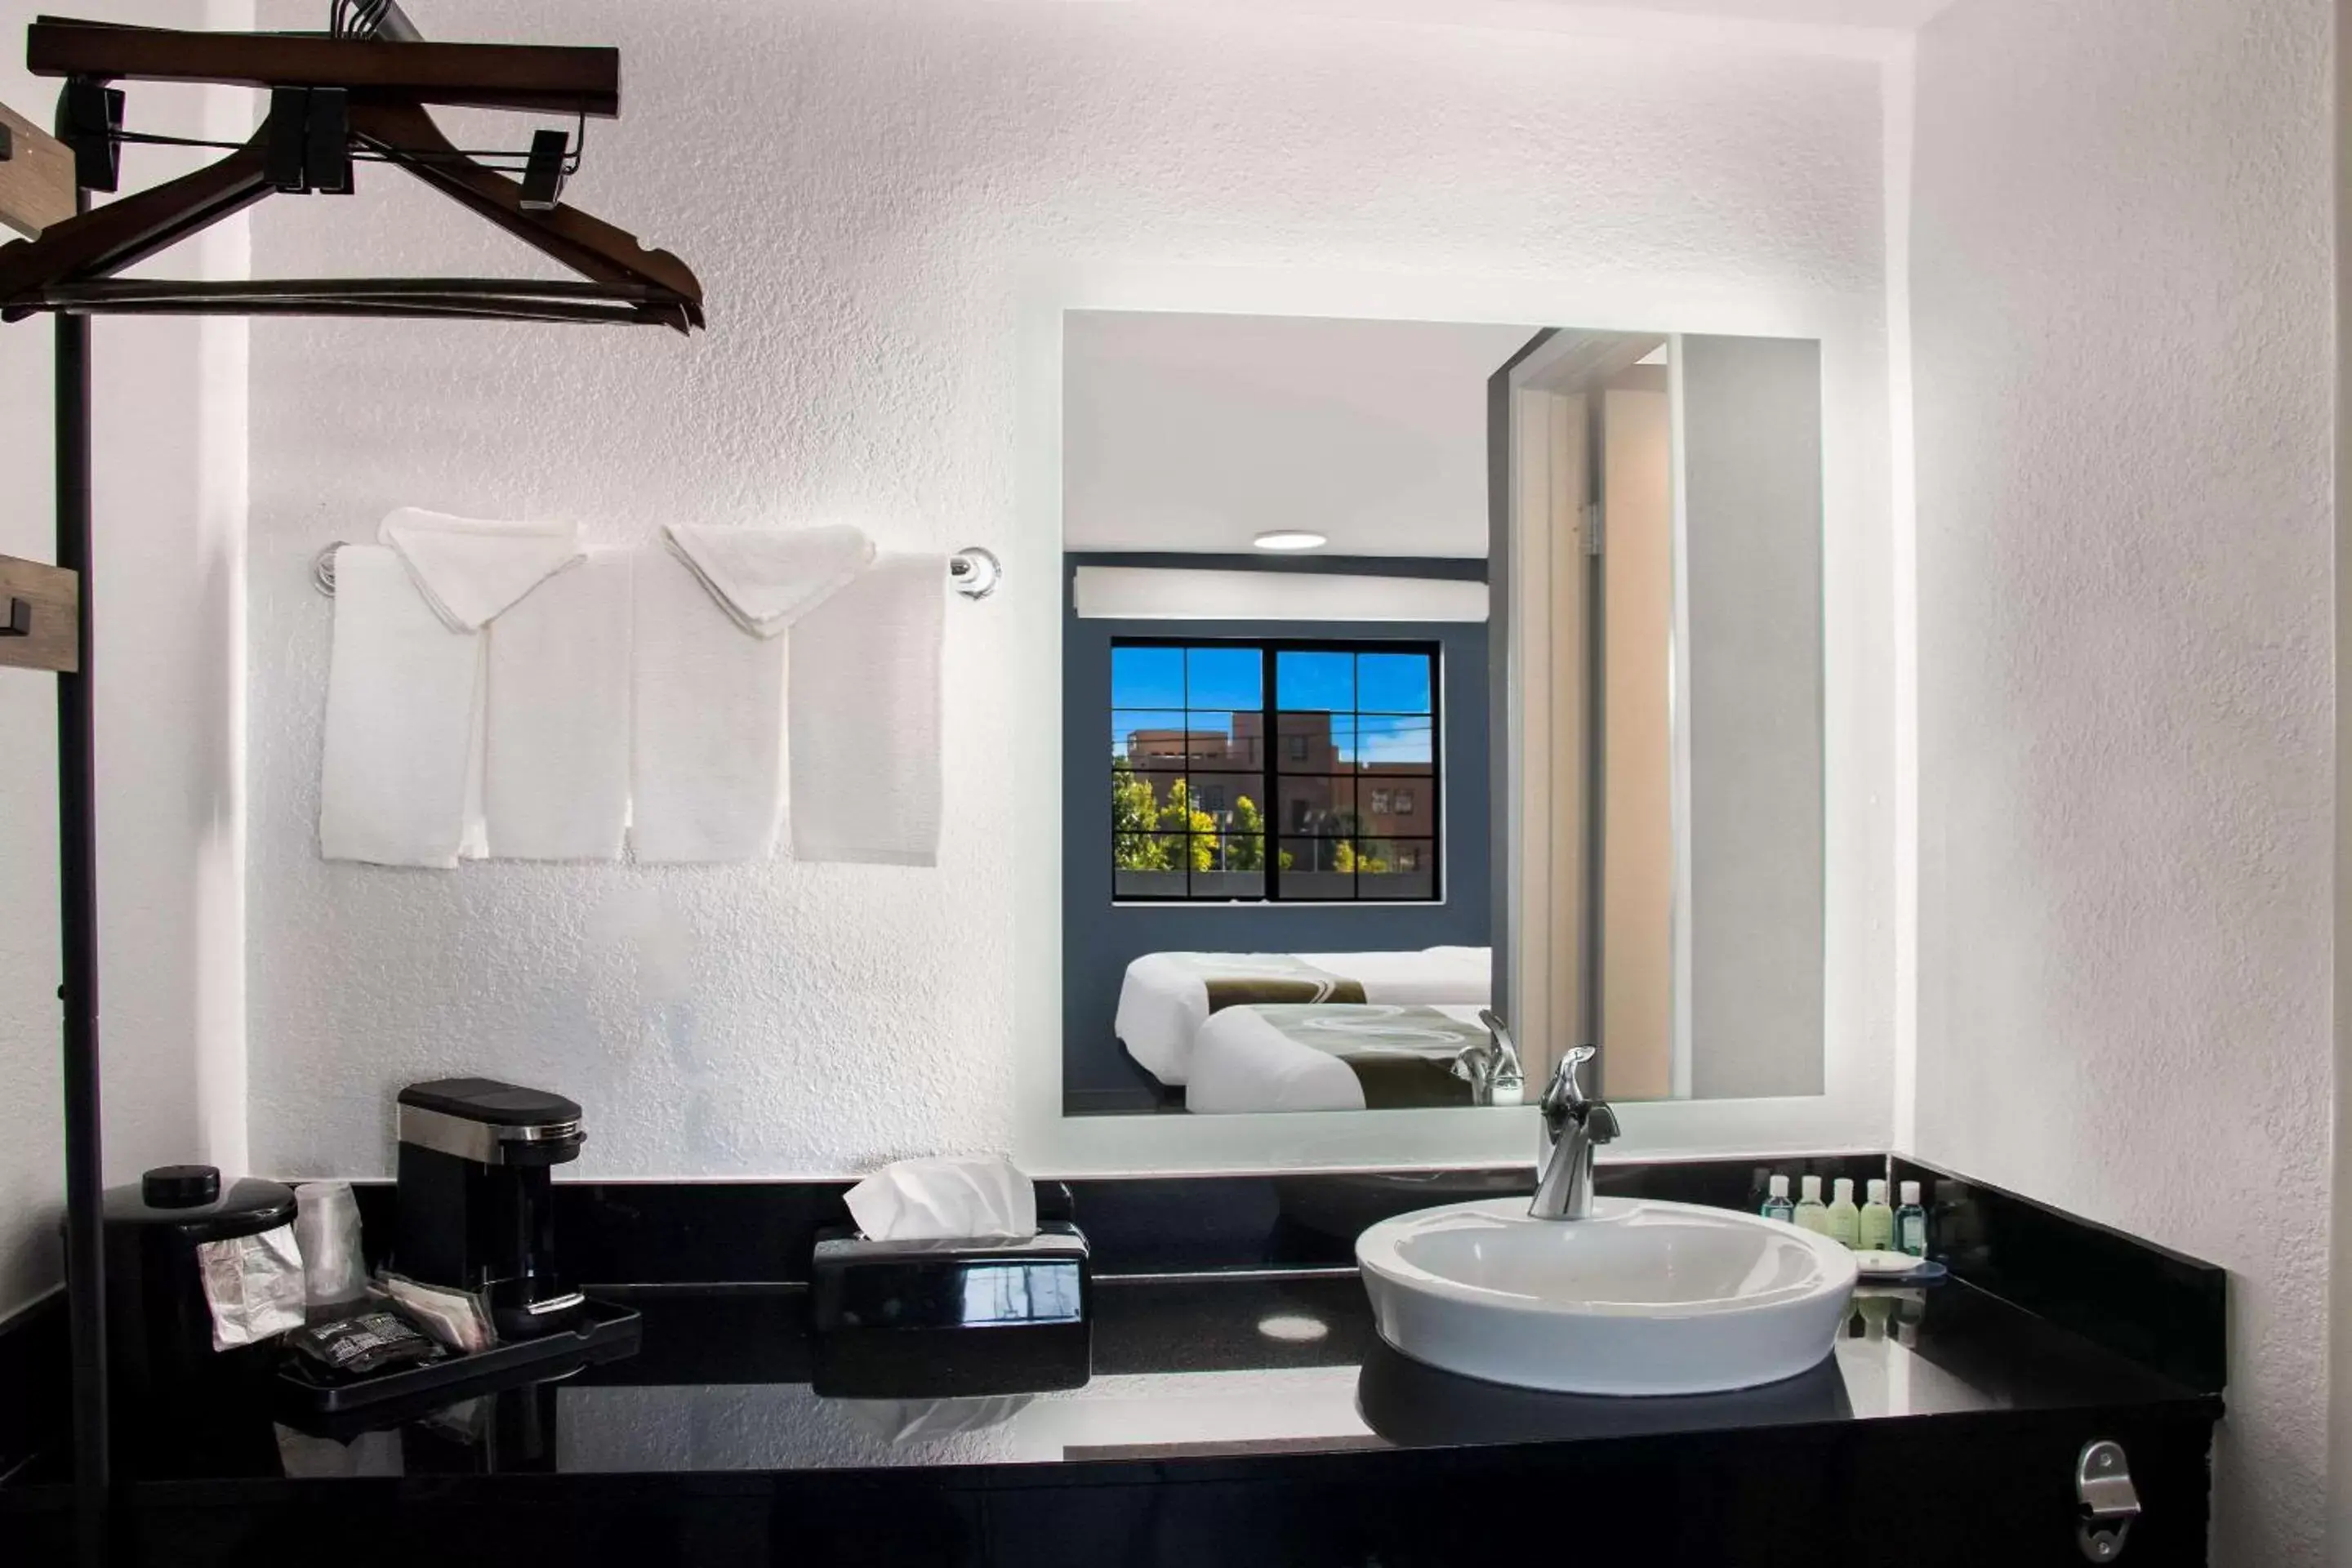 Bedroom, Bathroom in Quality Inn Santa Fe New Mexico